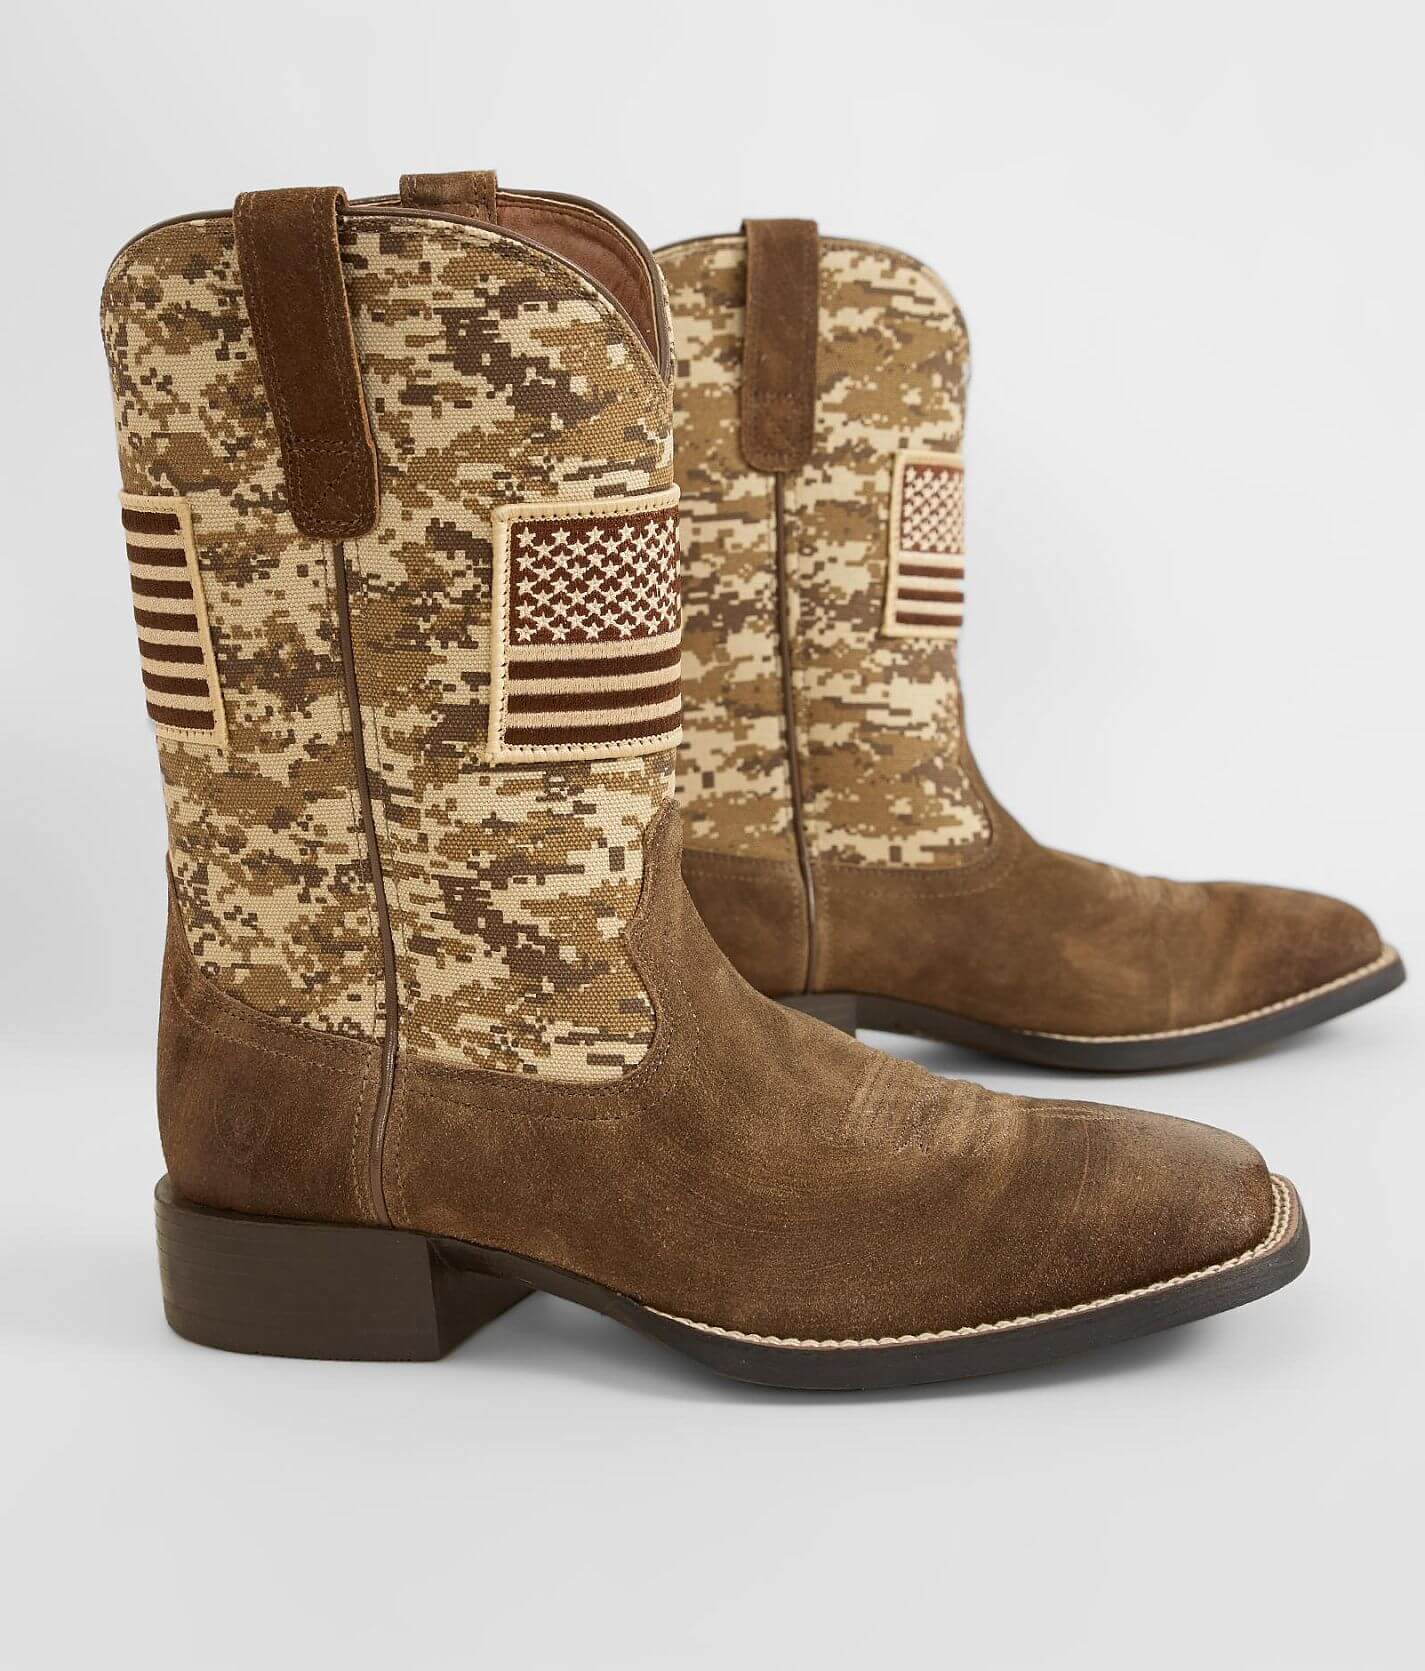 Ariat Sport Patriot Leather Cowboy Boot - Men's Shoes in Mocha 